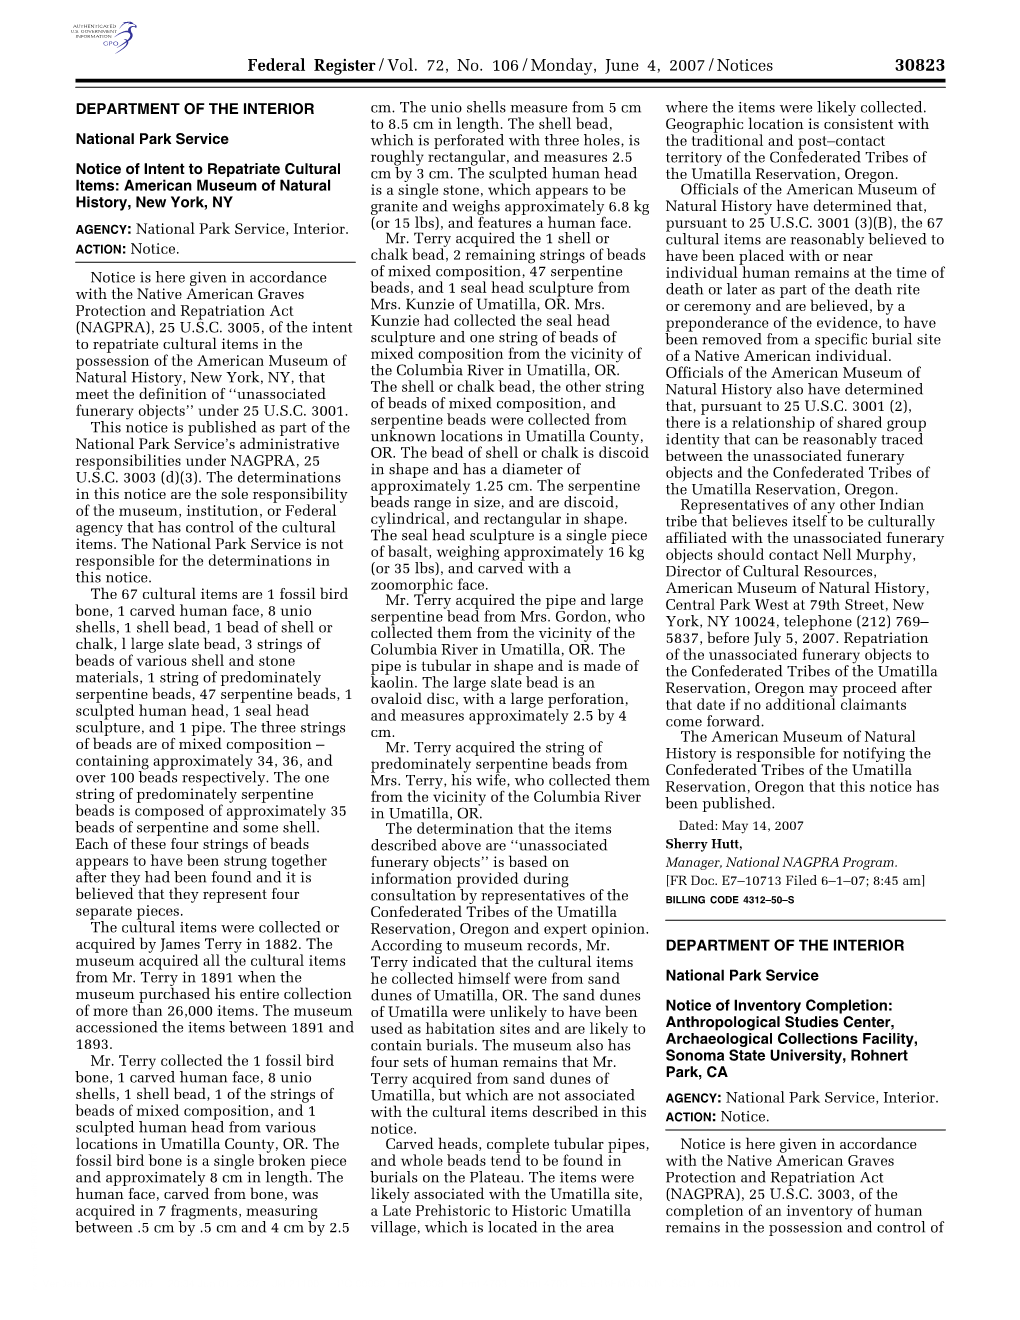 Federal Register/Vol. 72, No. 106/Monday, June 4, 2007/Notices